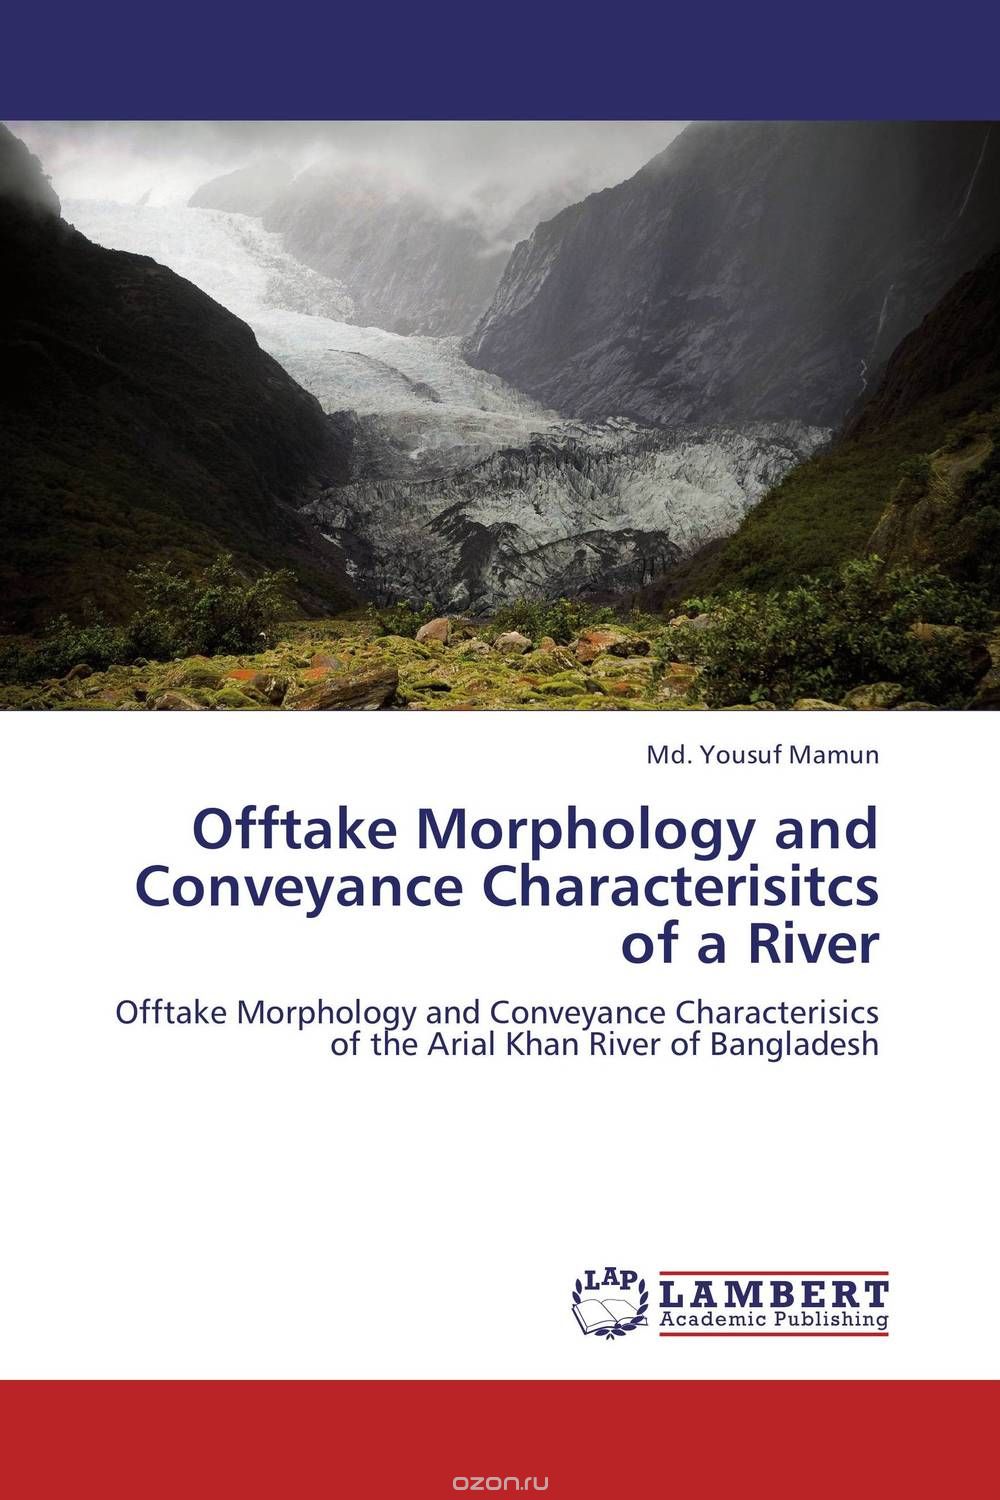 Скачать книгу "Offtake Morphology and Conveyance Characterisitcs of a River"